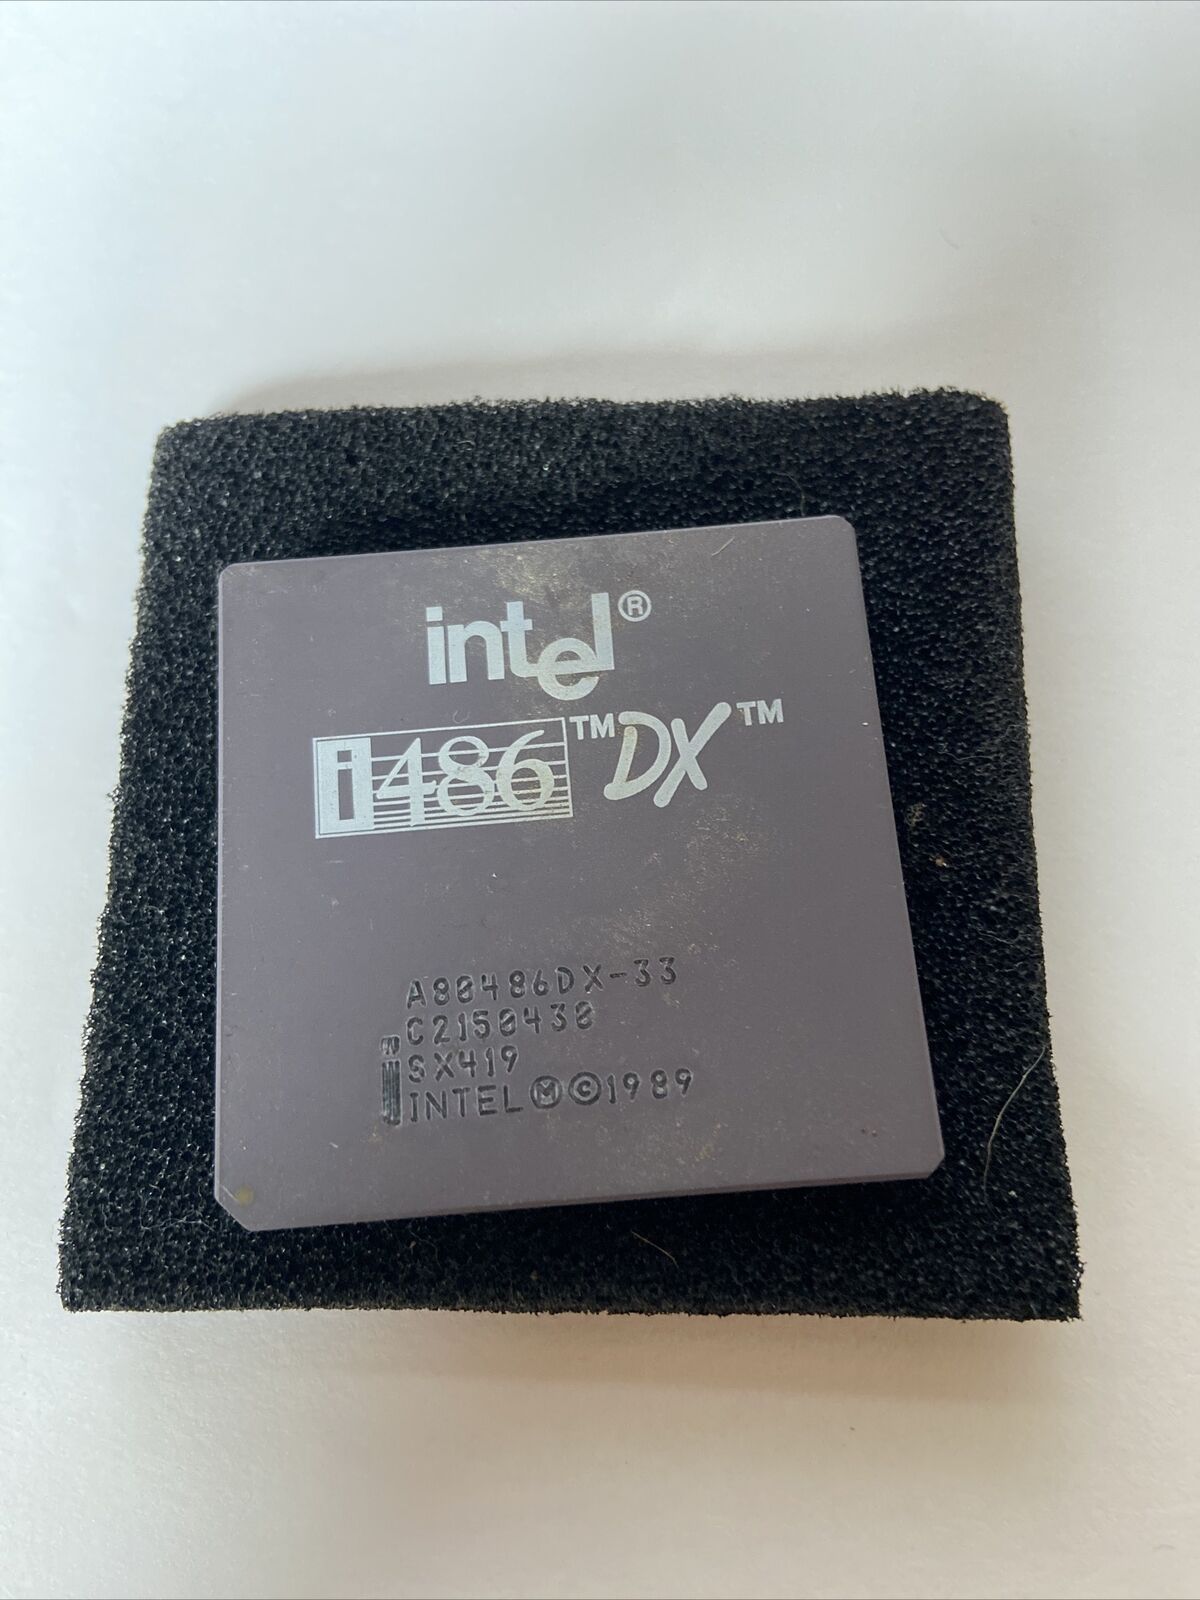 Vintage Intel SX419 i486DX/33 CPU A80486DX-33 1989 LOGO